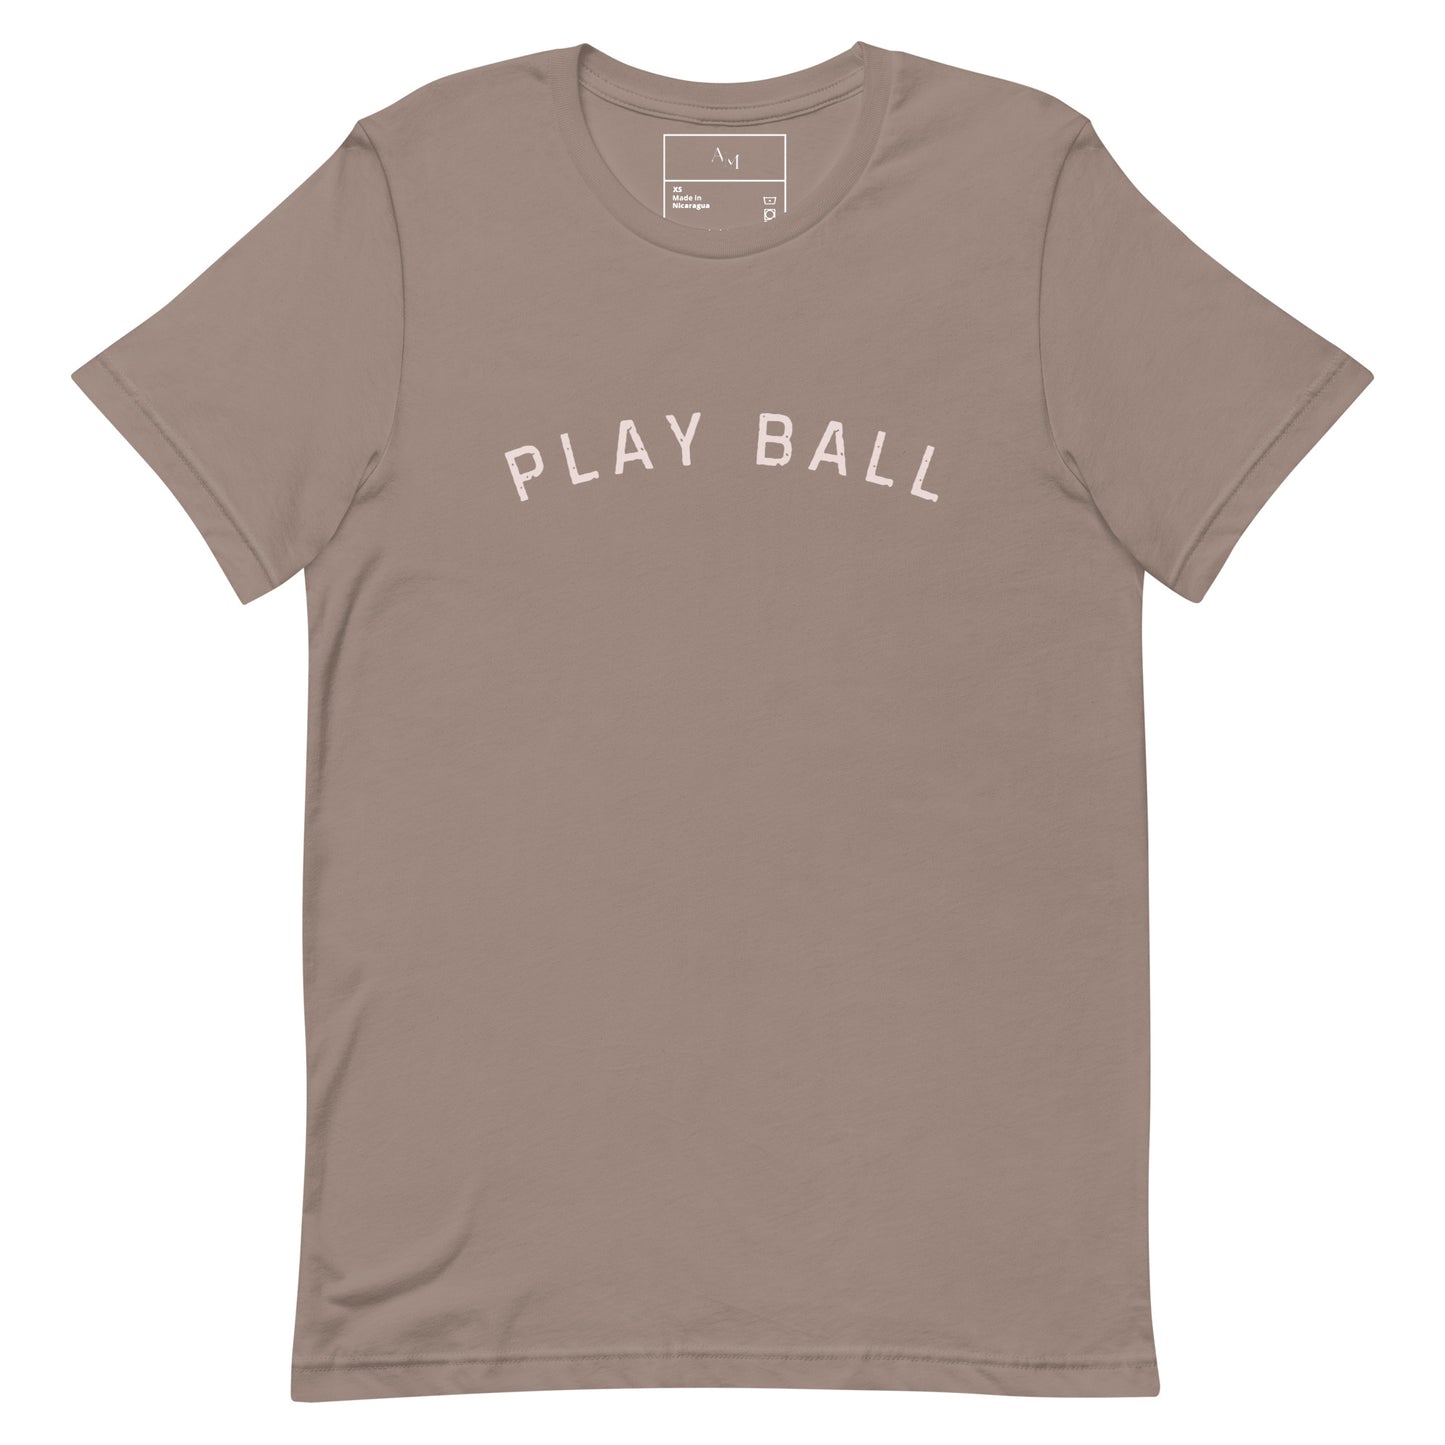 Play Ball Tee